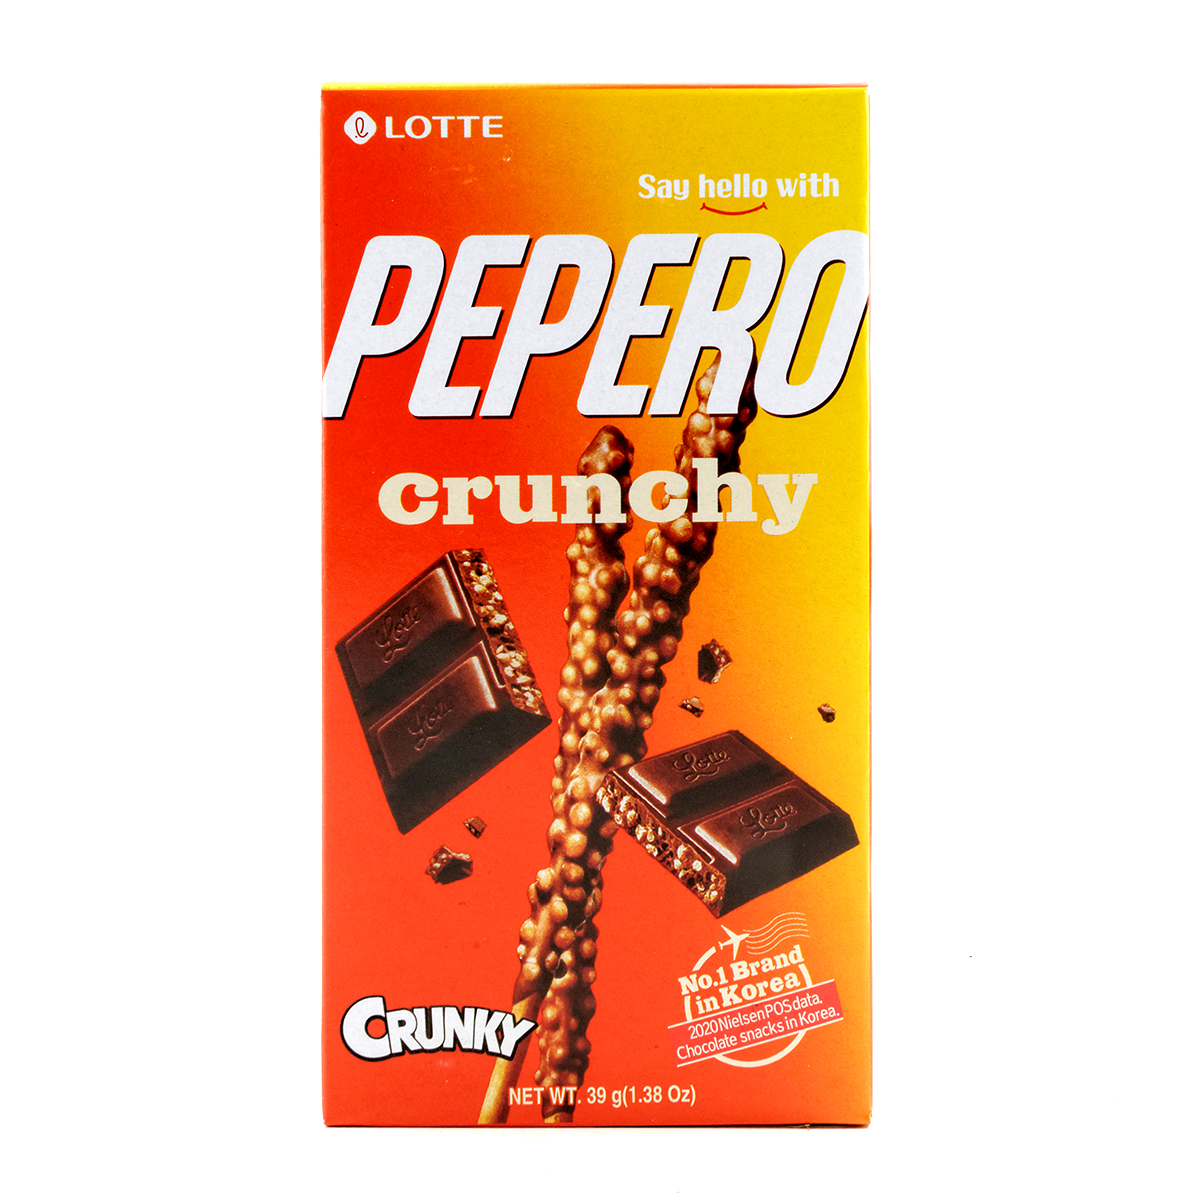 Dulciuri - Crunchy Pepero LOTTE 39g, asianfood.ro